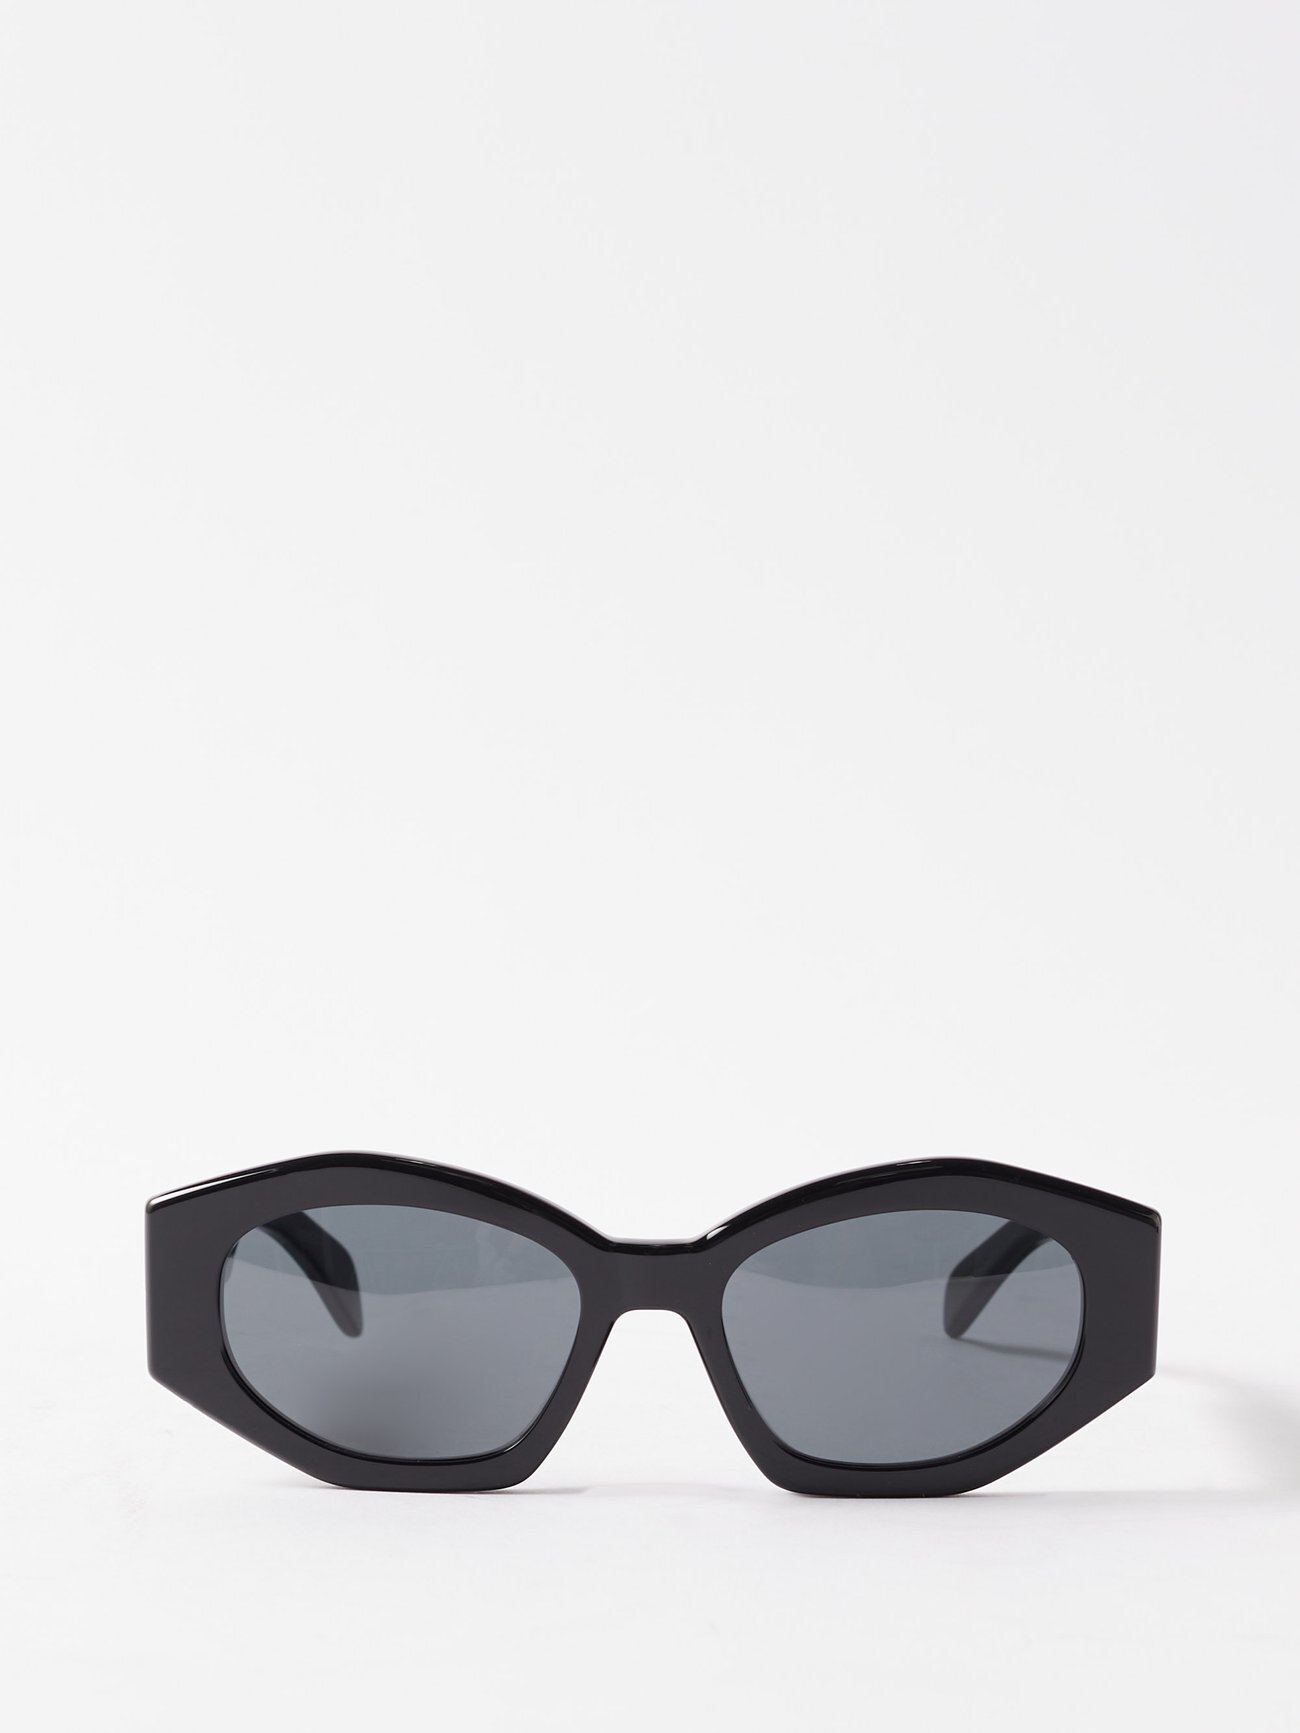 Celine Eyewear - Triomphe Oval Acetate Sunglasses - Womens - Black